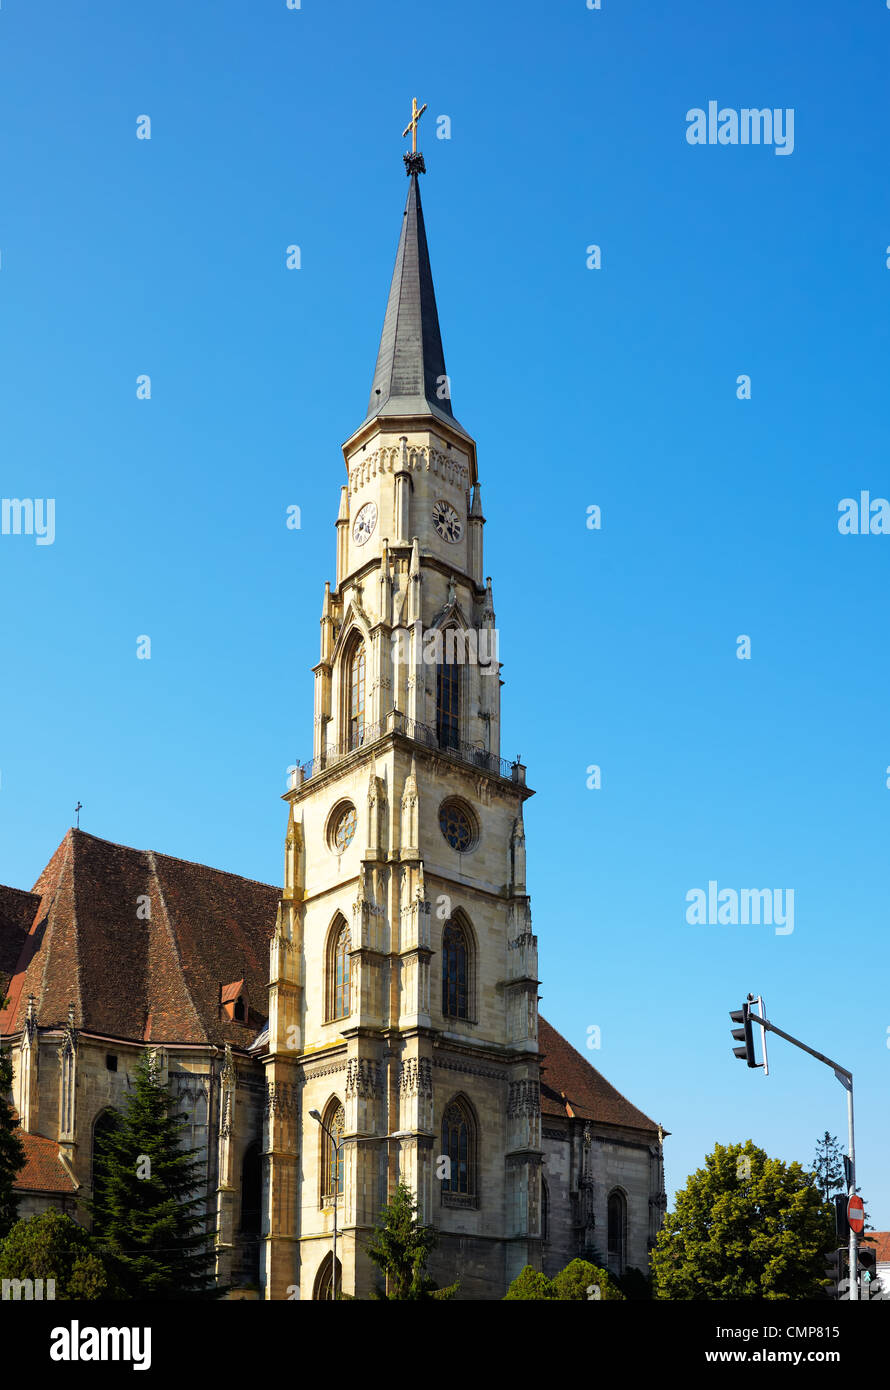 Turm von St. Michael katholische Kathedrale in Cluj-Napoca, Rumänien. Stockfoto